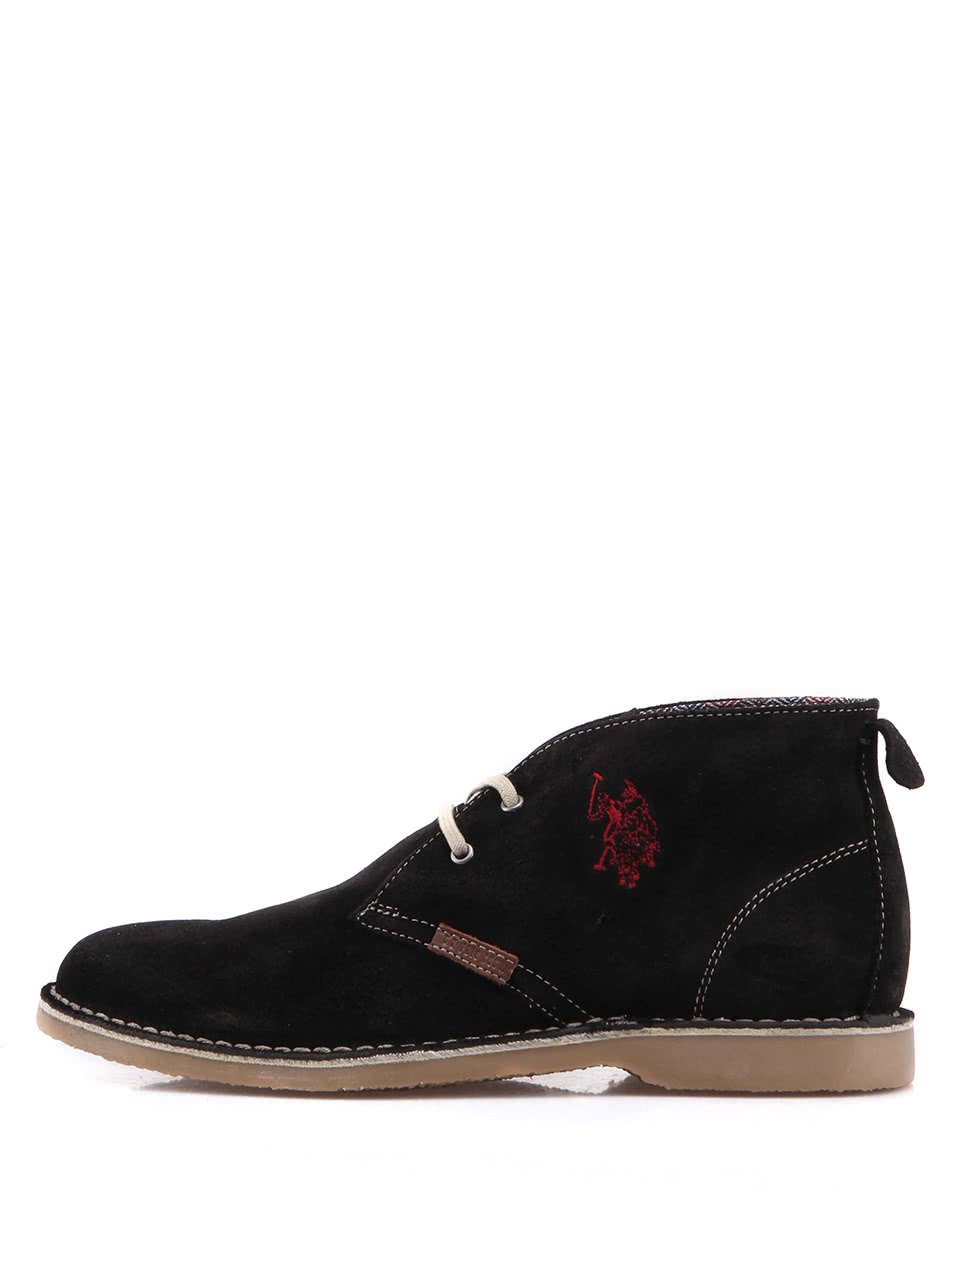 Černé dámské kožené boty U.S. Polo Assn. Glenda